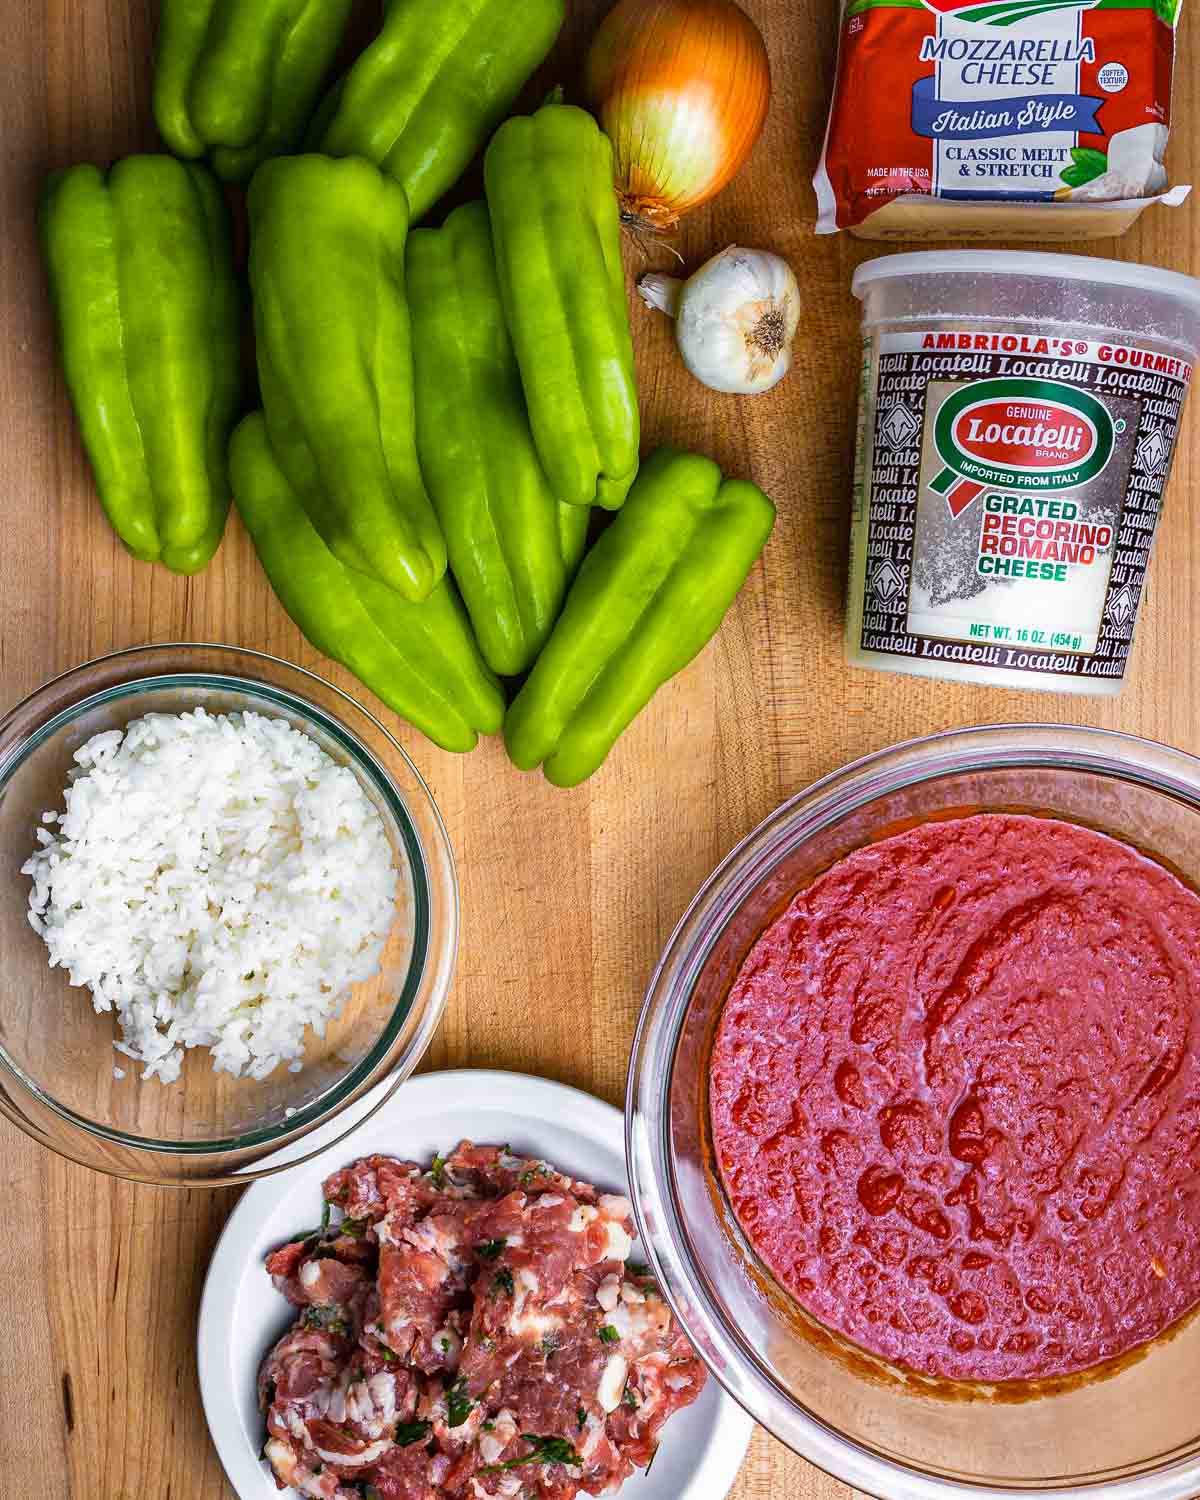 Ingredients shown: cubanelle peppers, onion, garlic, mozzarella, Pecorino, rice, sausage, and toamto sauce.